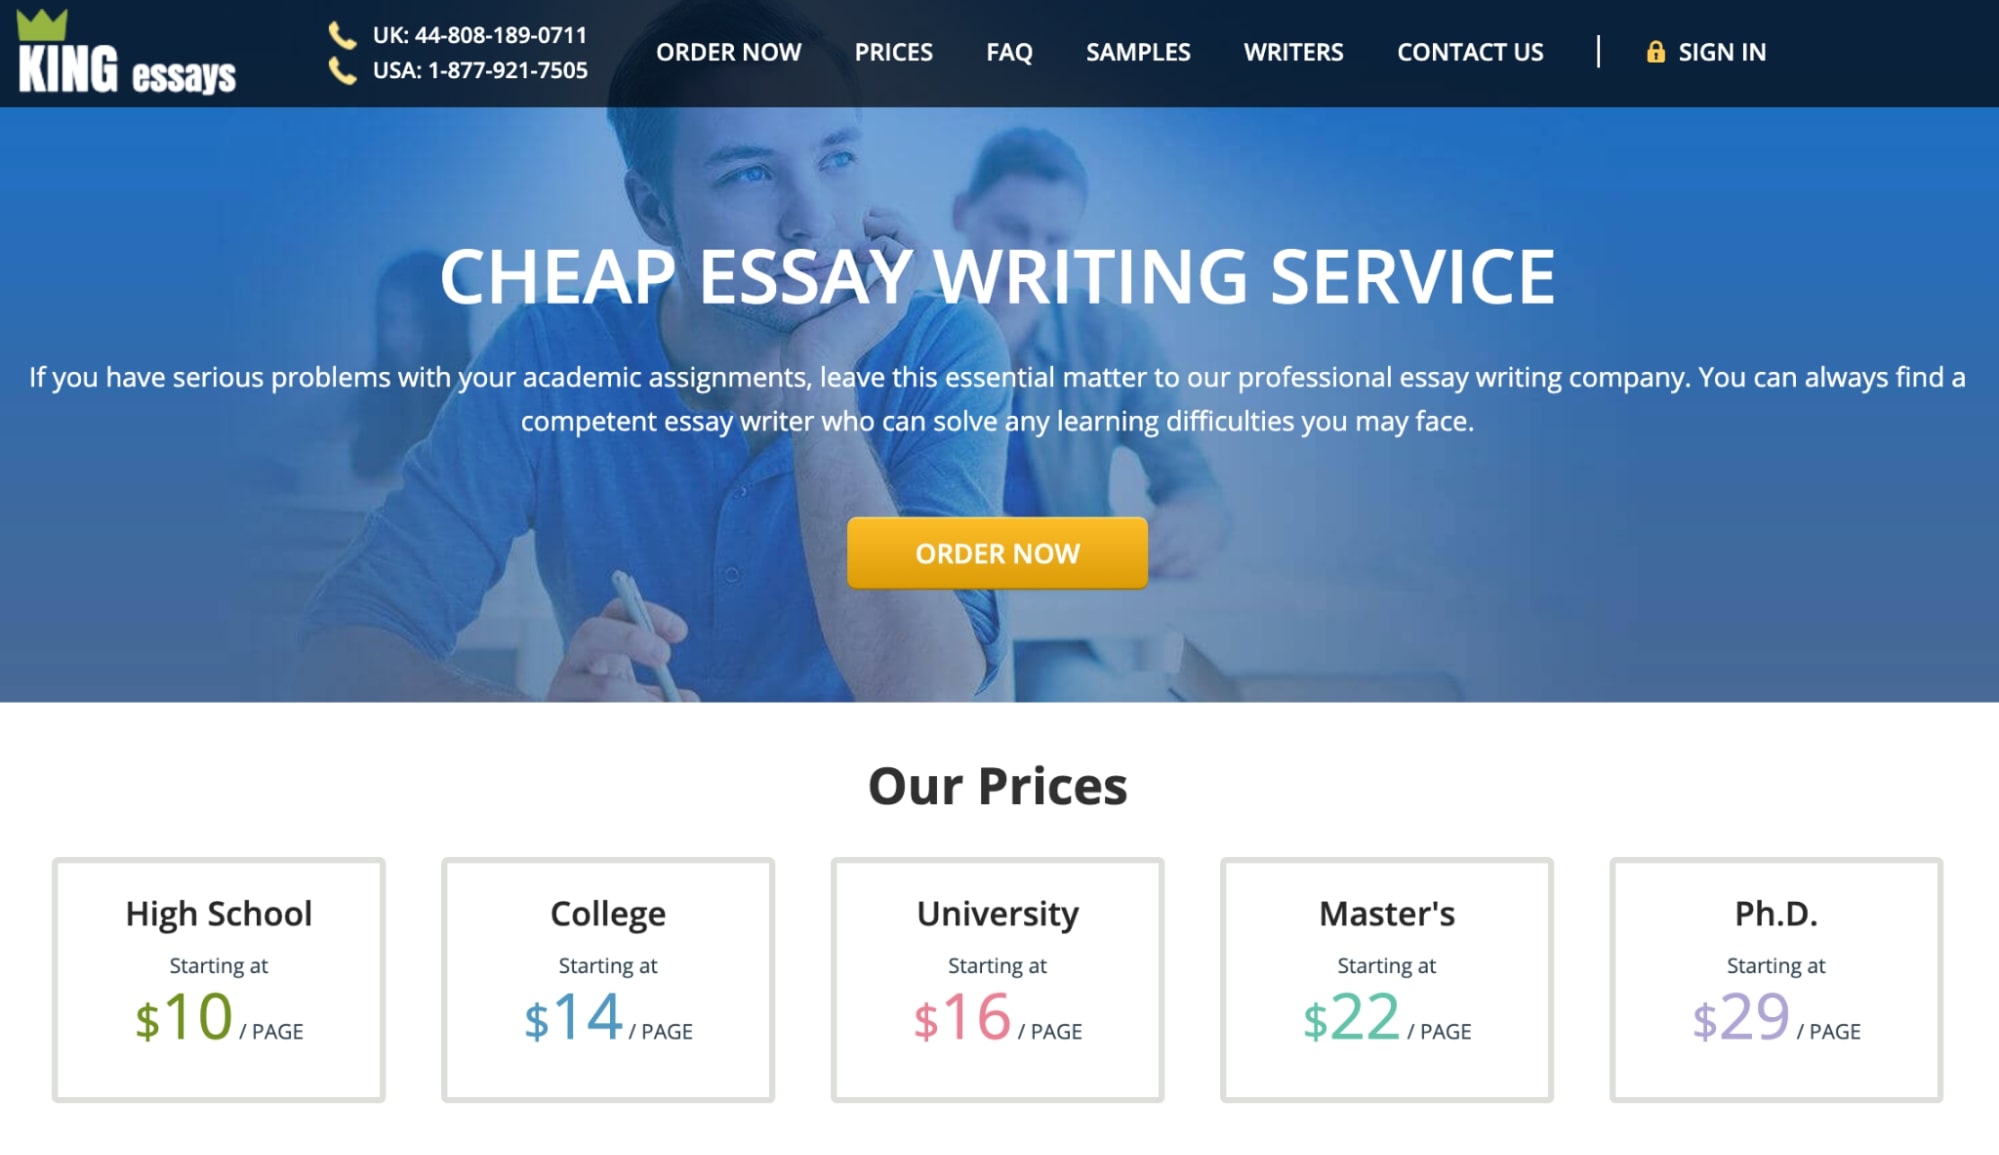 kingessays.com best essay writing service